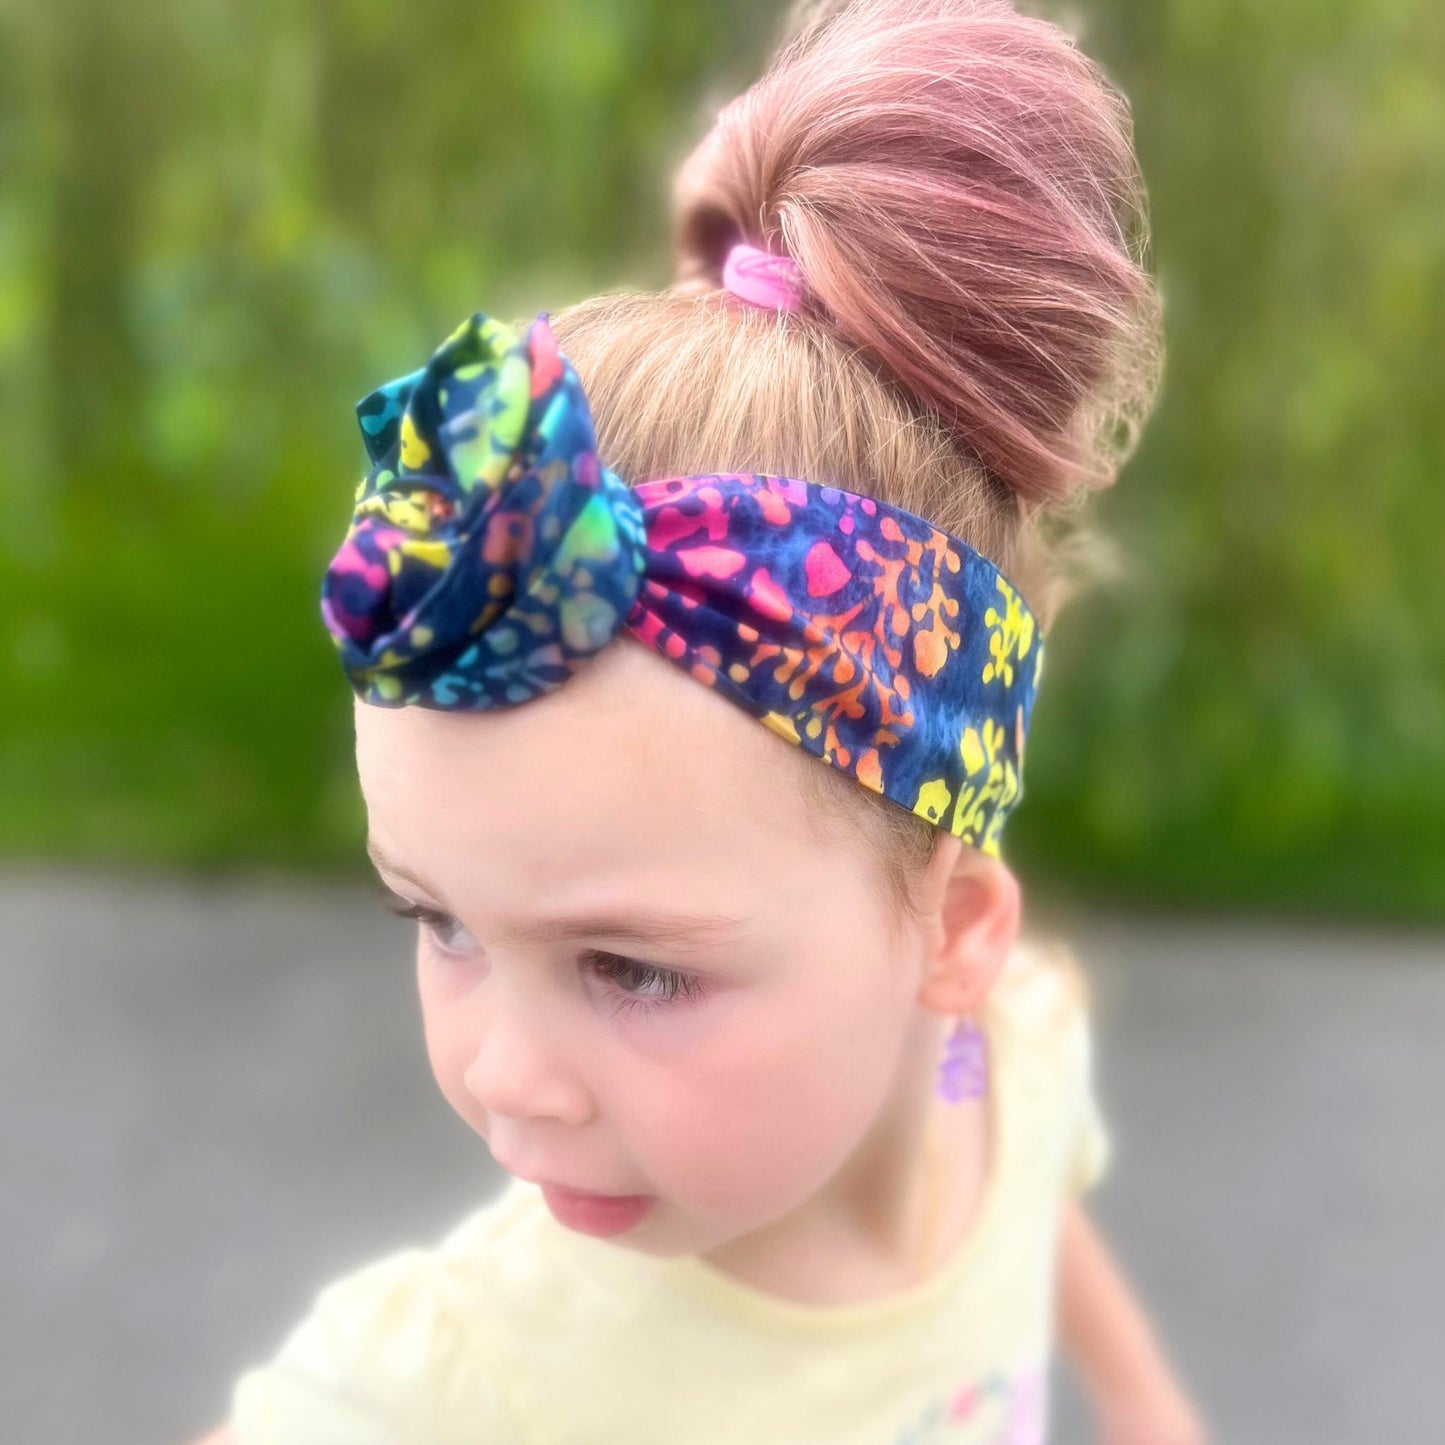 Kids Hair accessories, handmade in Australia